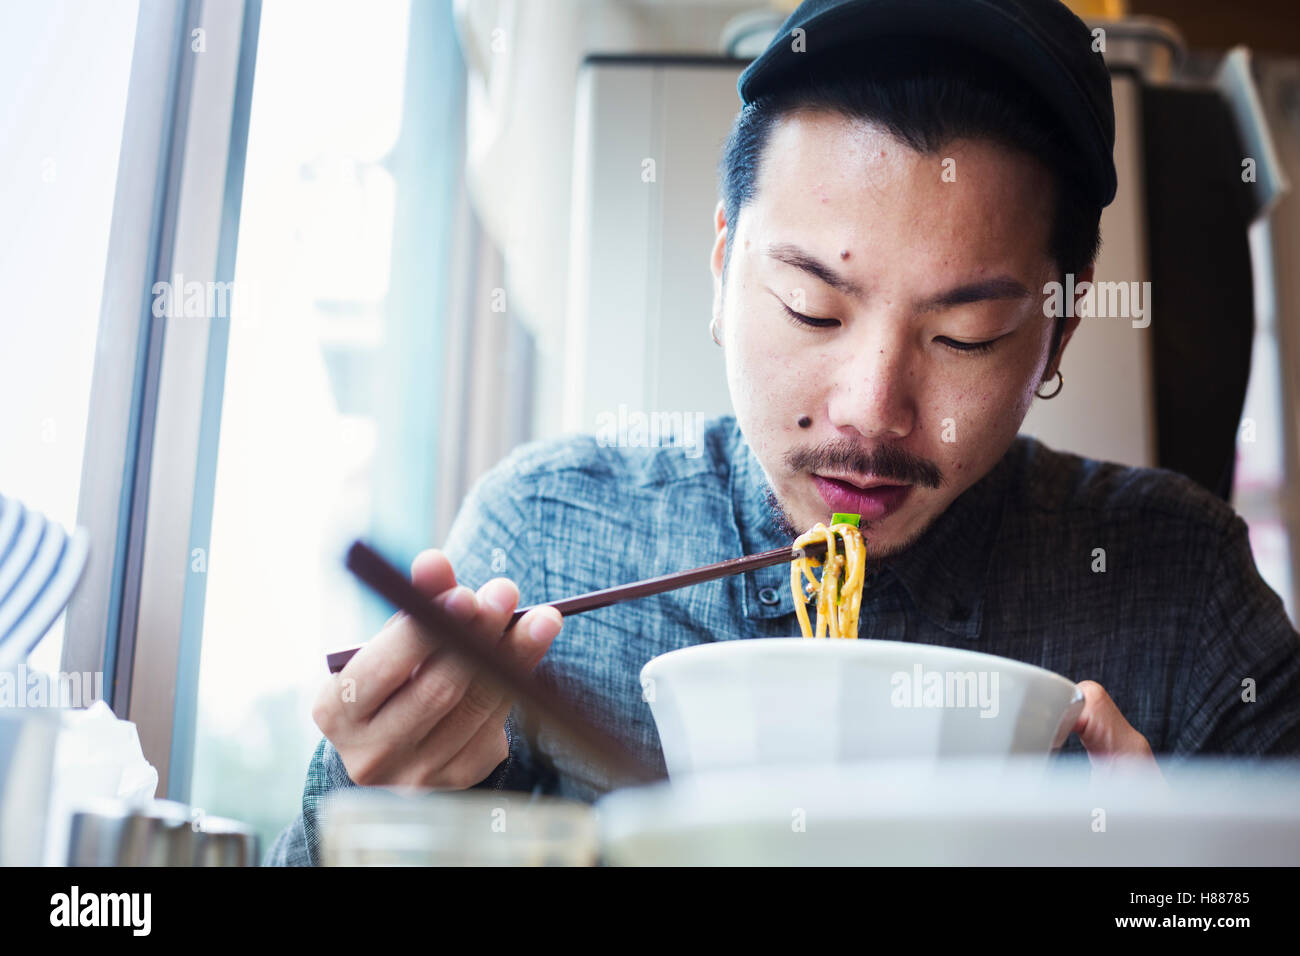 A ramen noodle cafe in a city.  A man sitting eating ramen noodle soup dish. Stock Photo